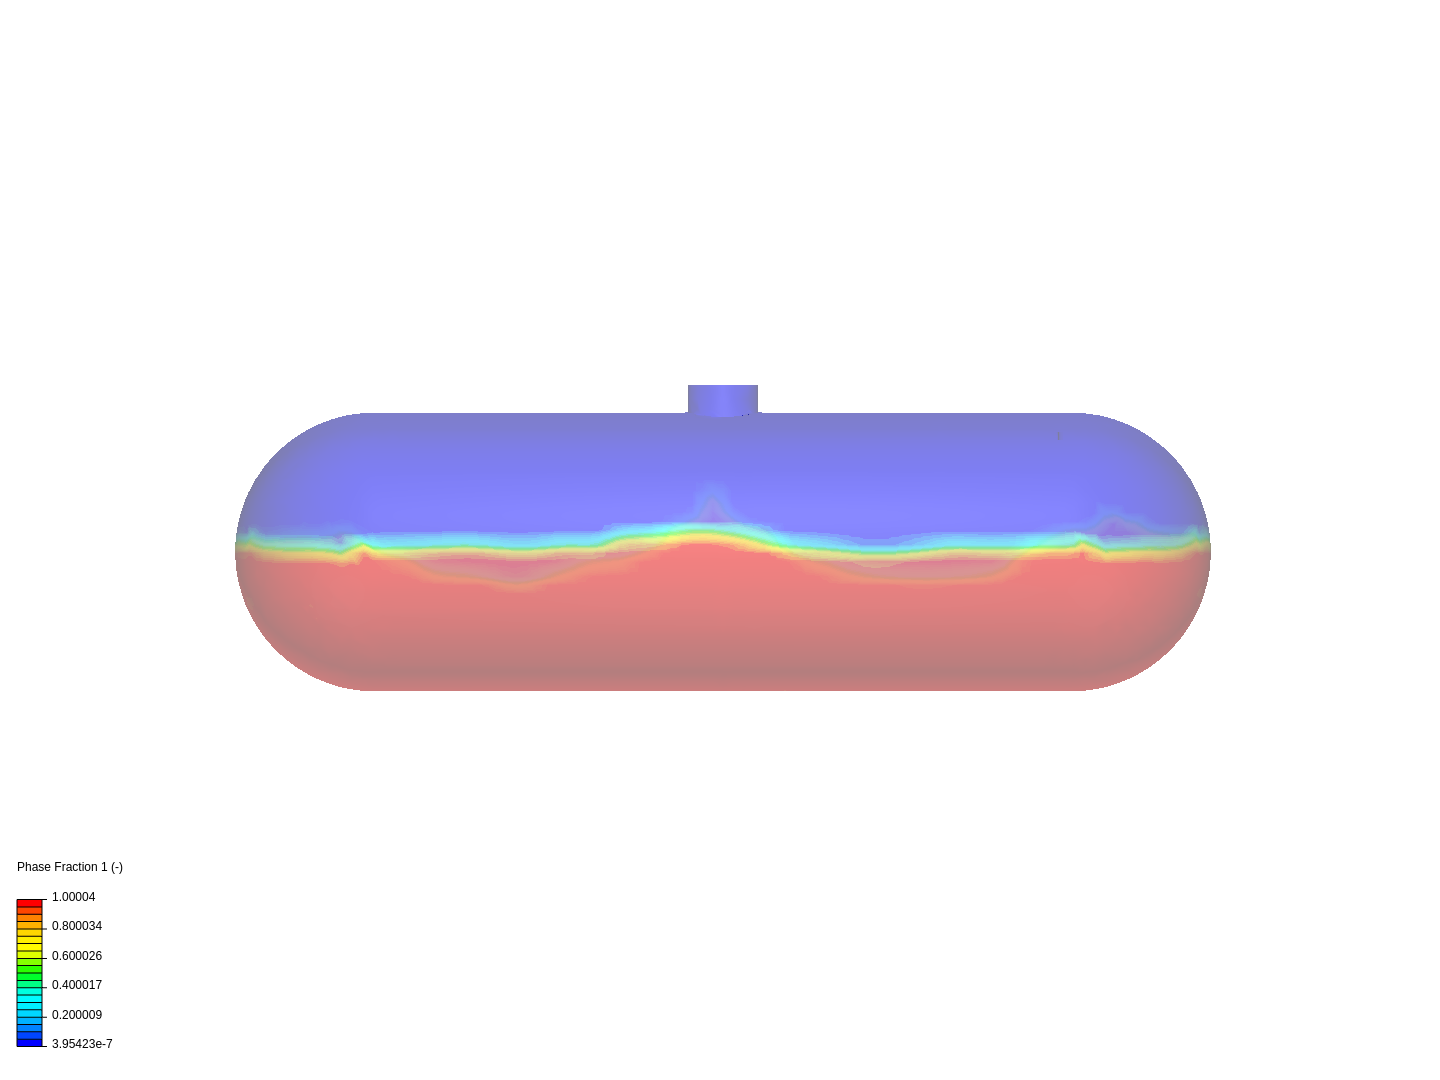 Cylinder Tank Sloshing image